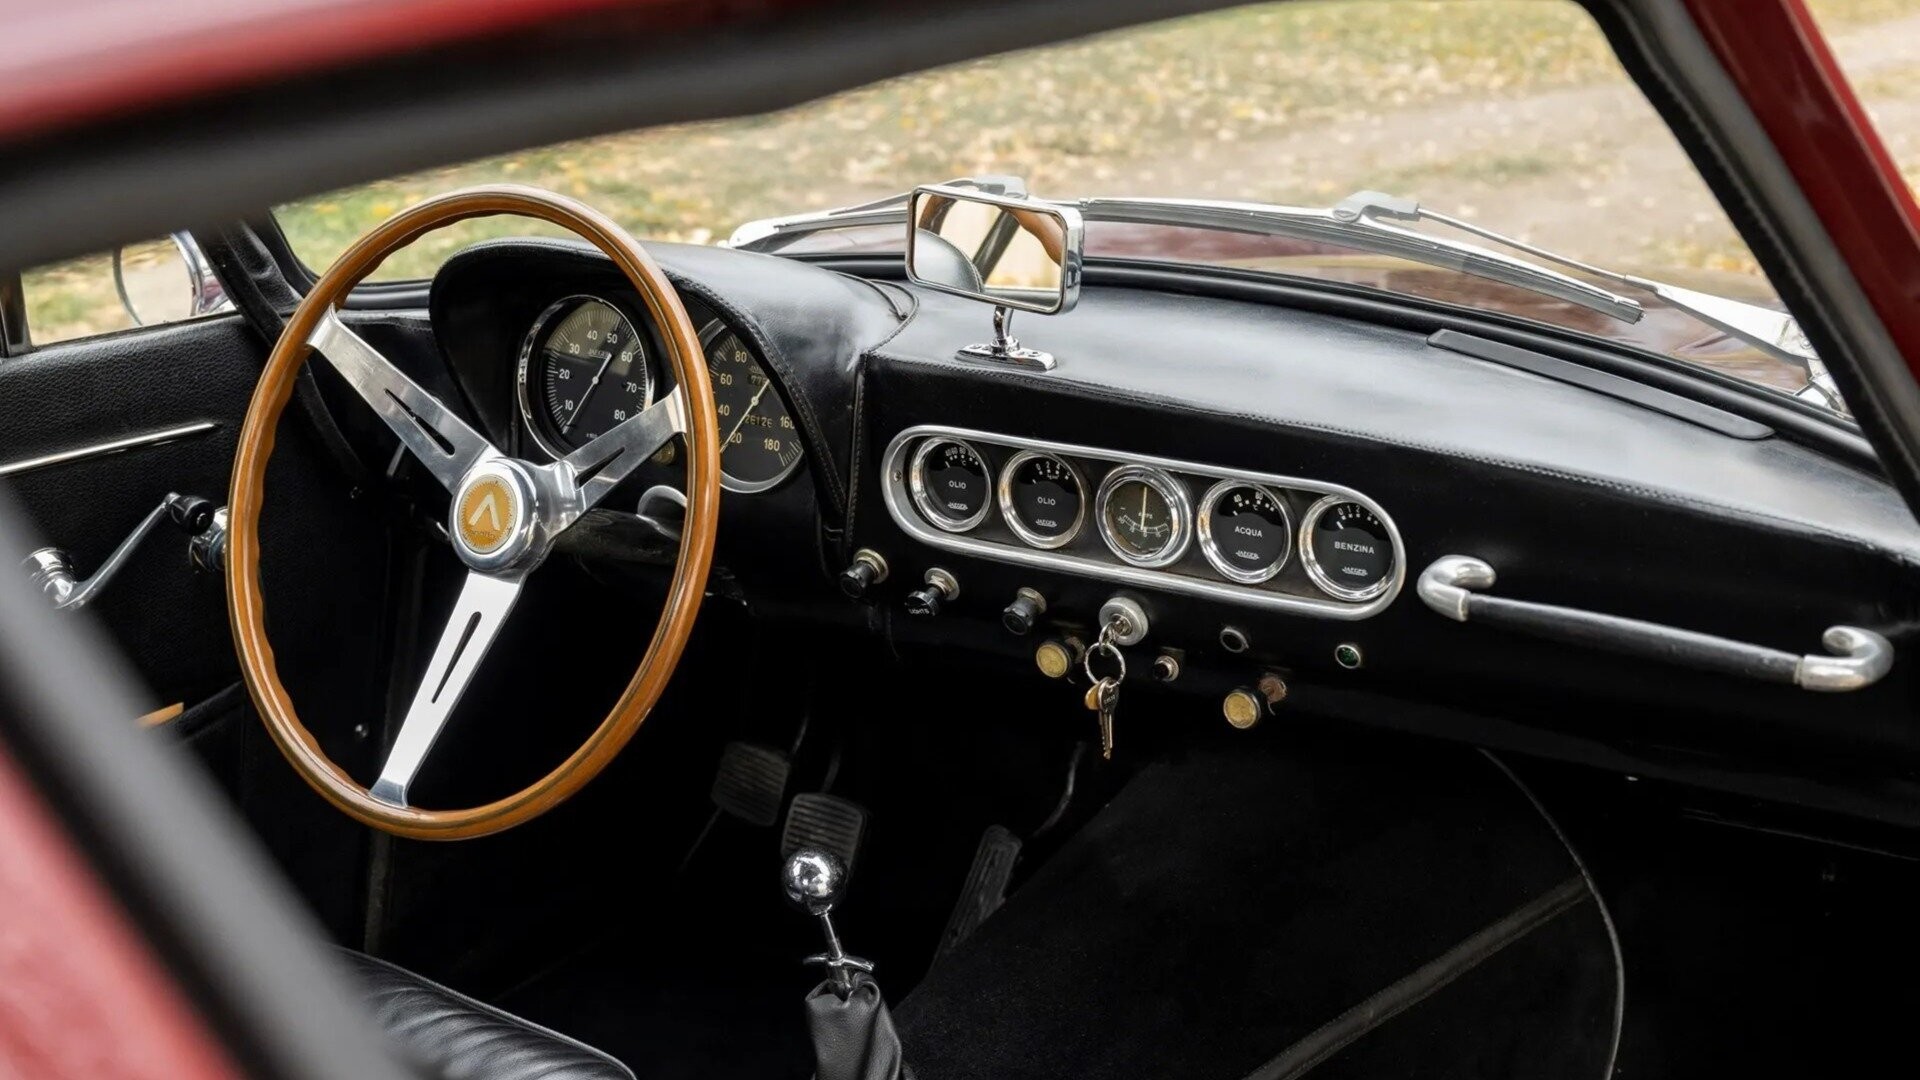 Оригинальный Apollo 3500 GT 1960-х годов